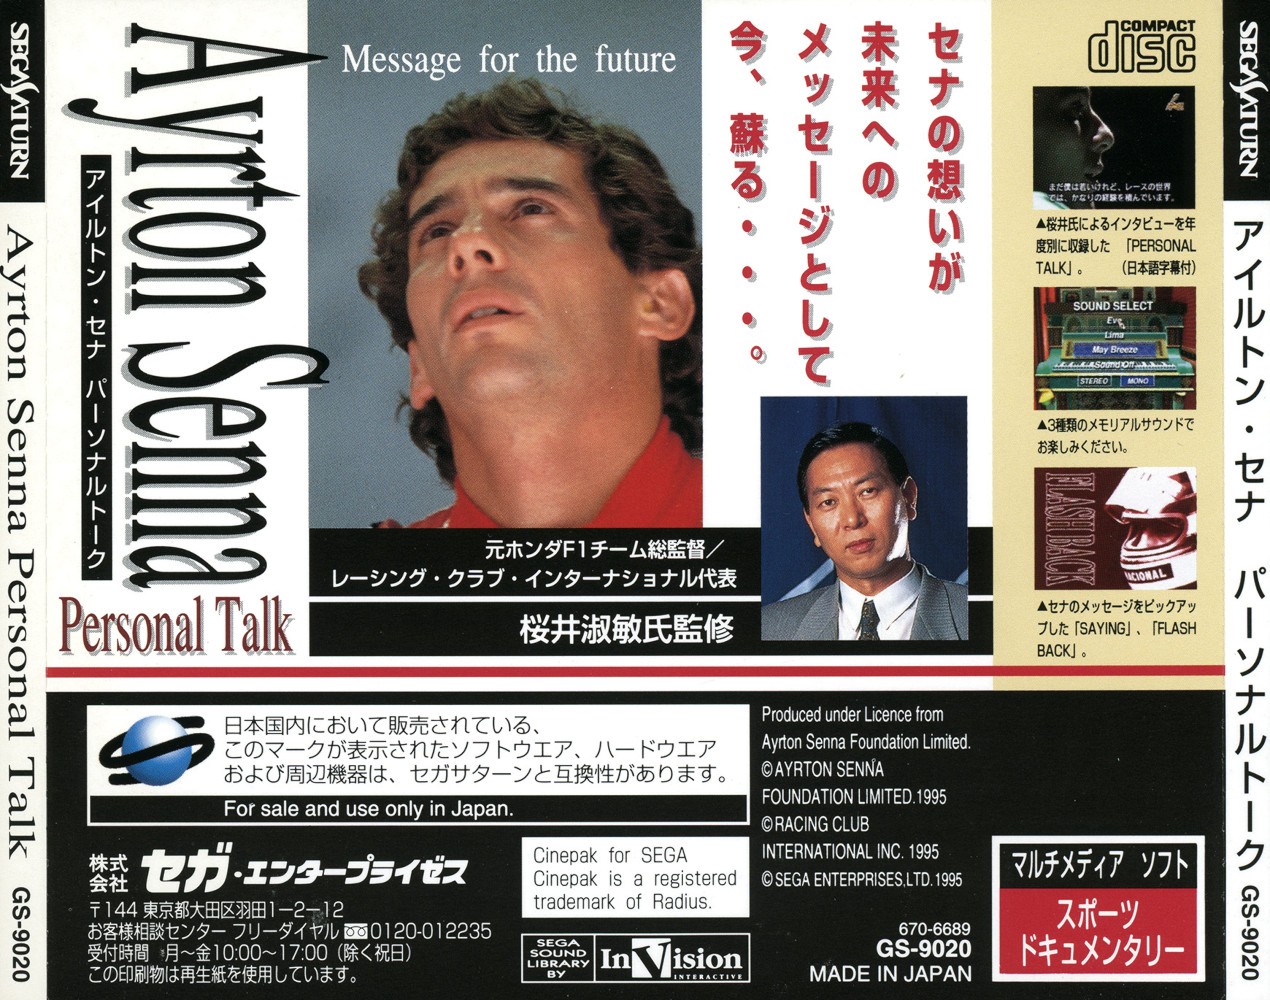 Capa do jogo Ayrton Senna Personal Talk: Message for the future